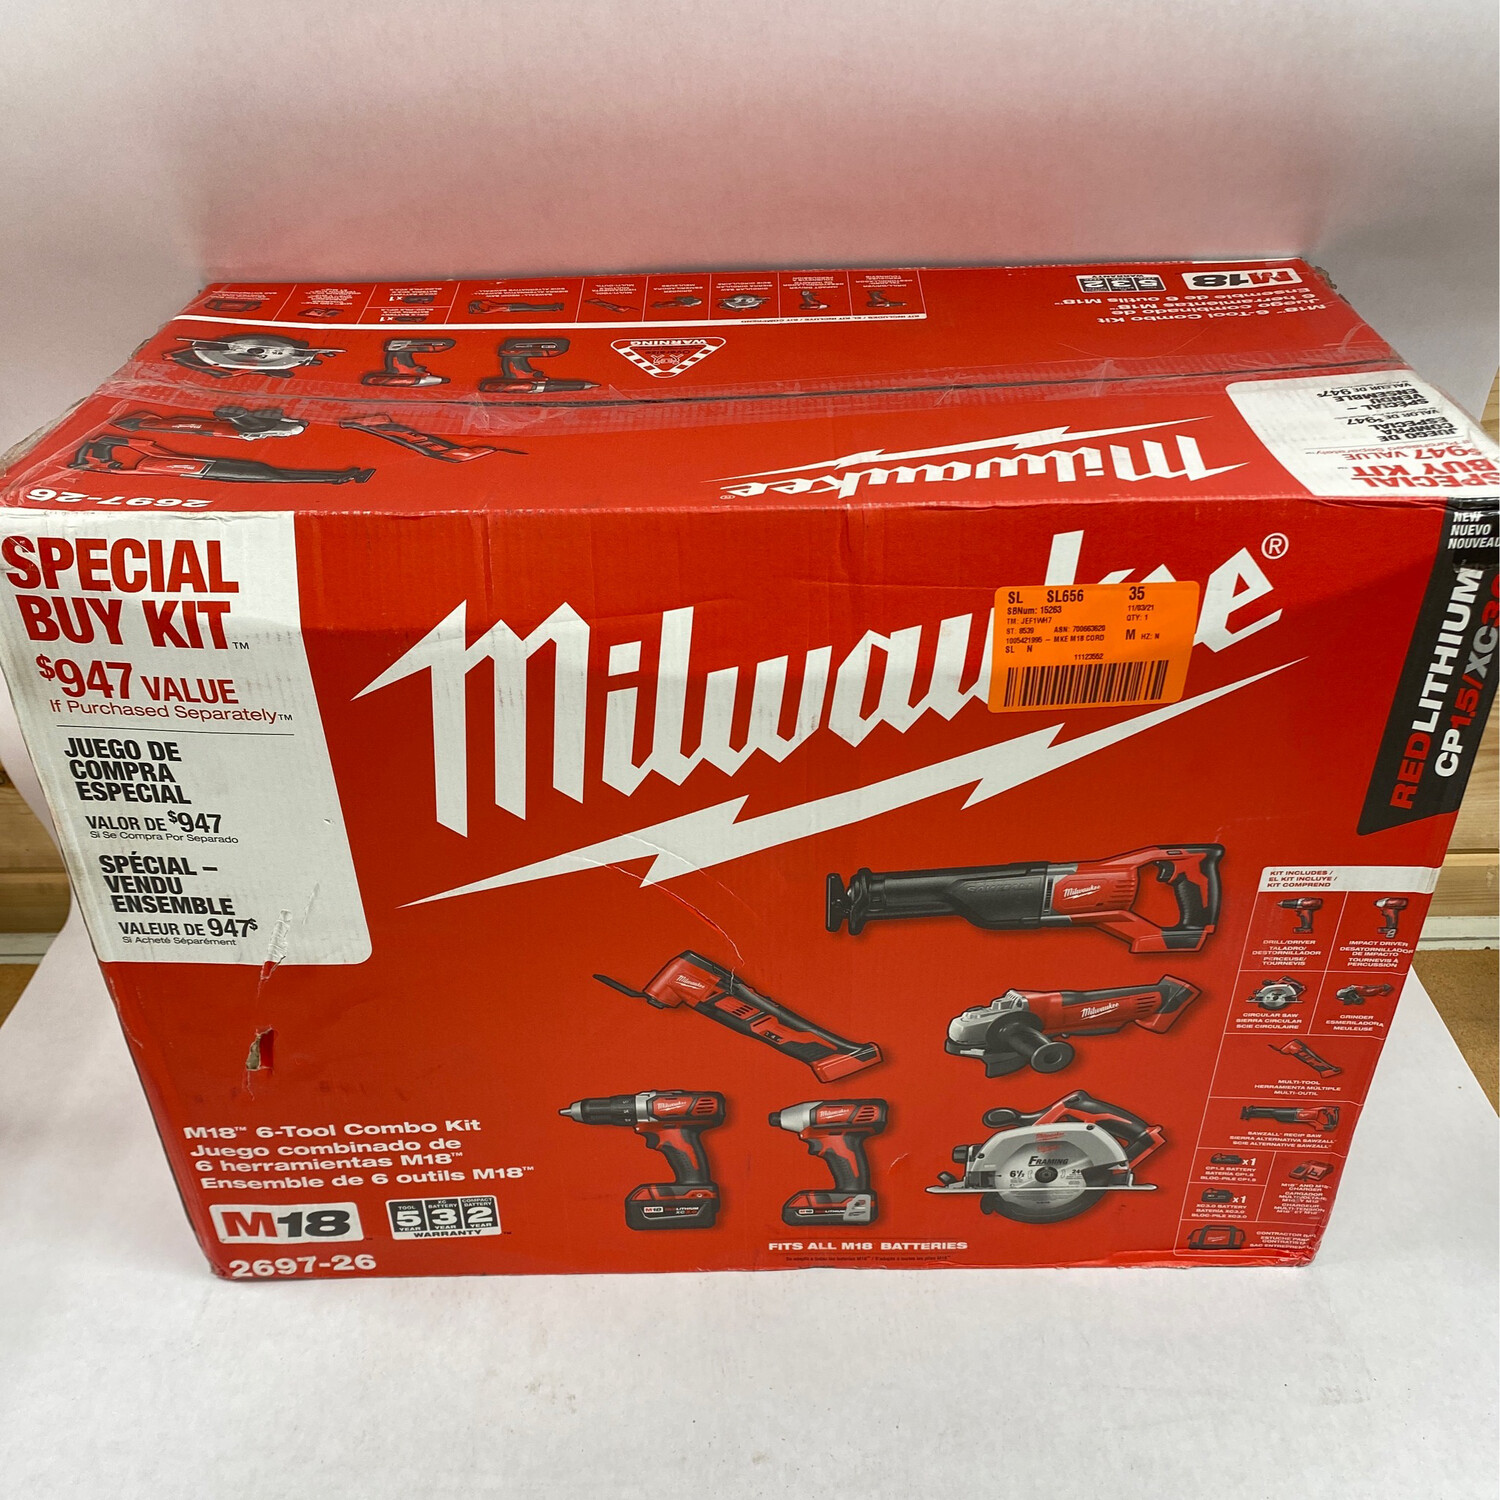 Milwaukee M18 6 Tool Combo Kit, 2697-26